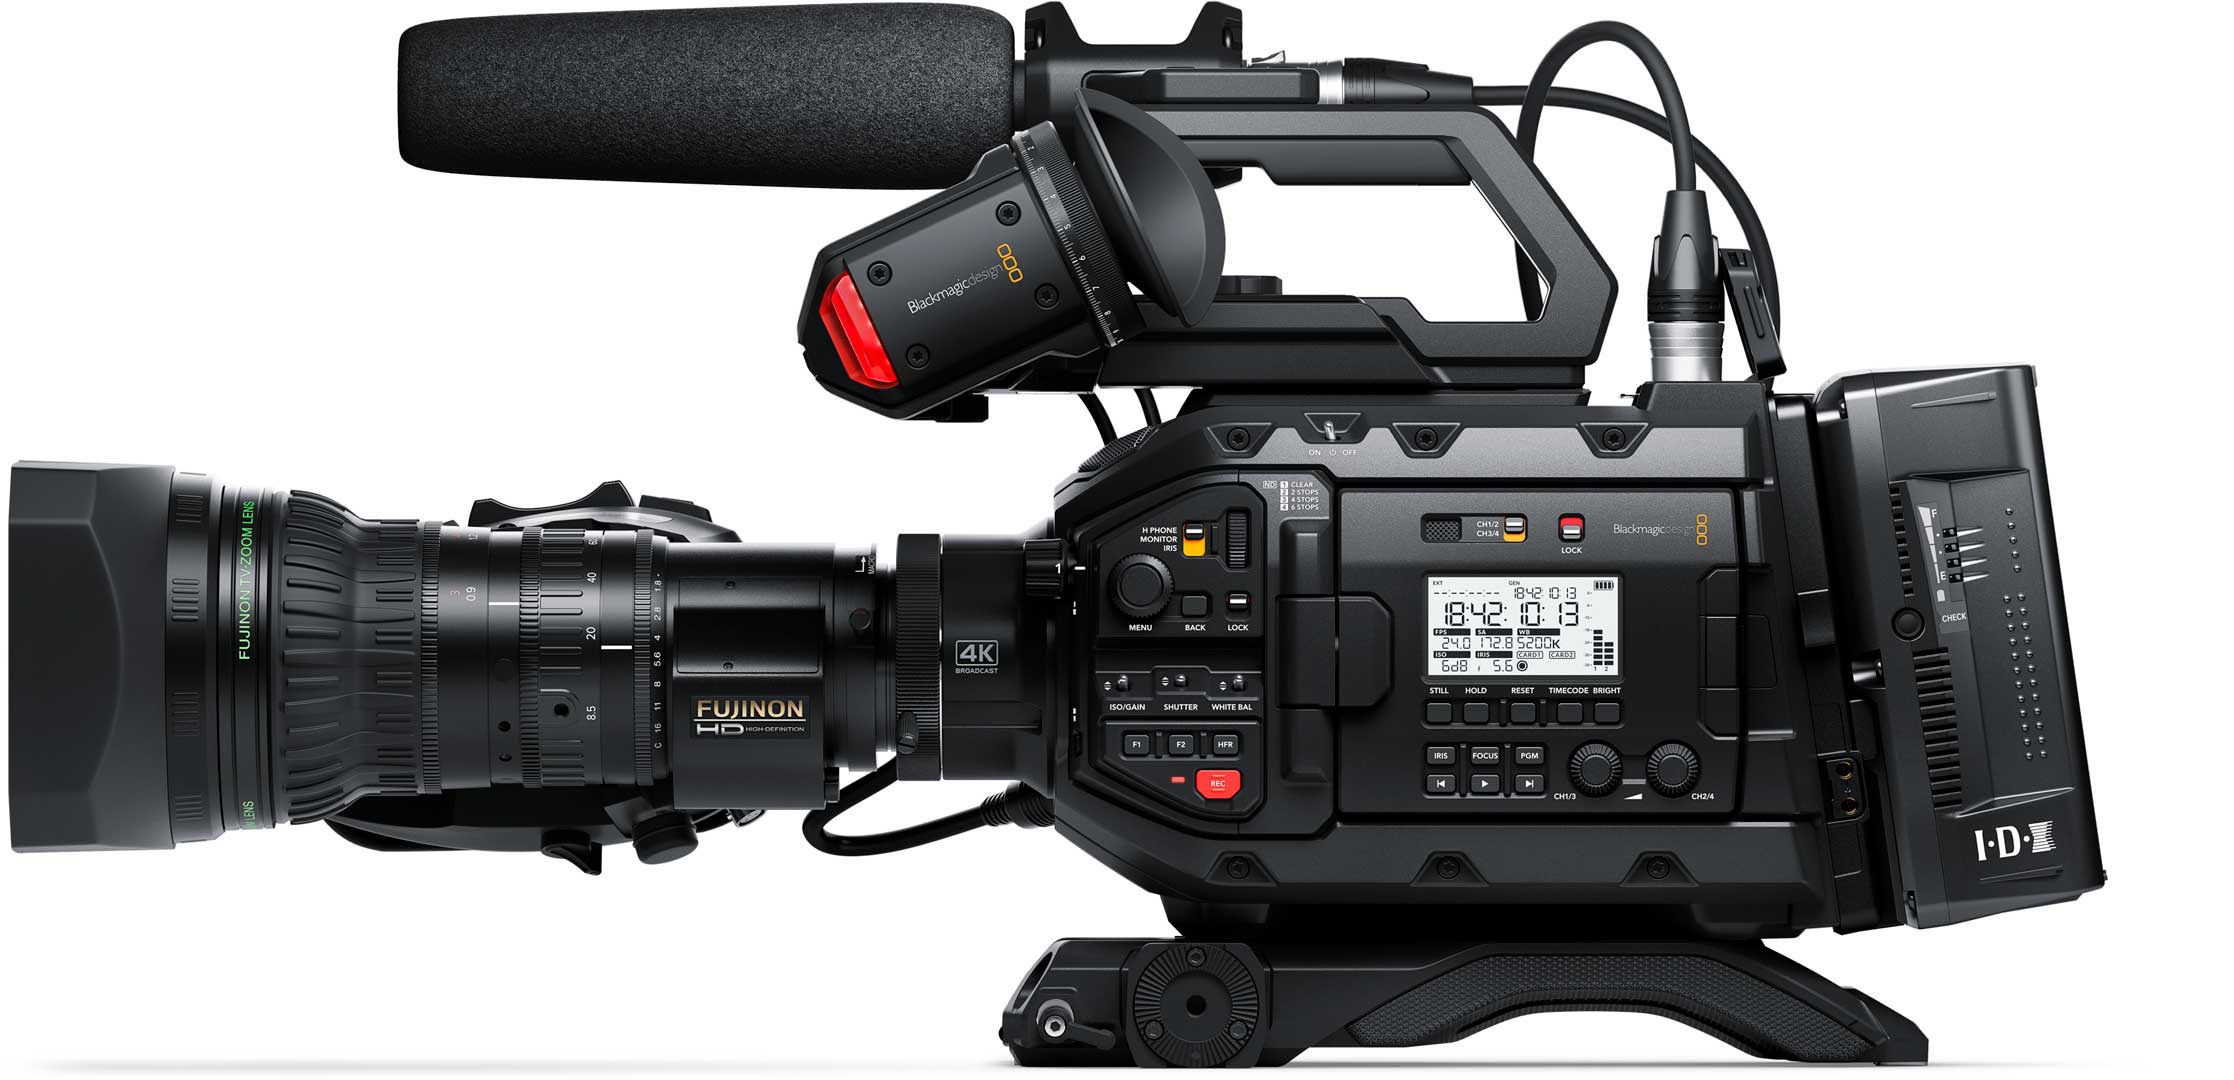 Blackmagic Design Introduces a 4K URSA Broadcast camera ...